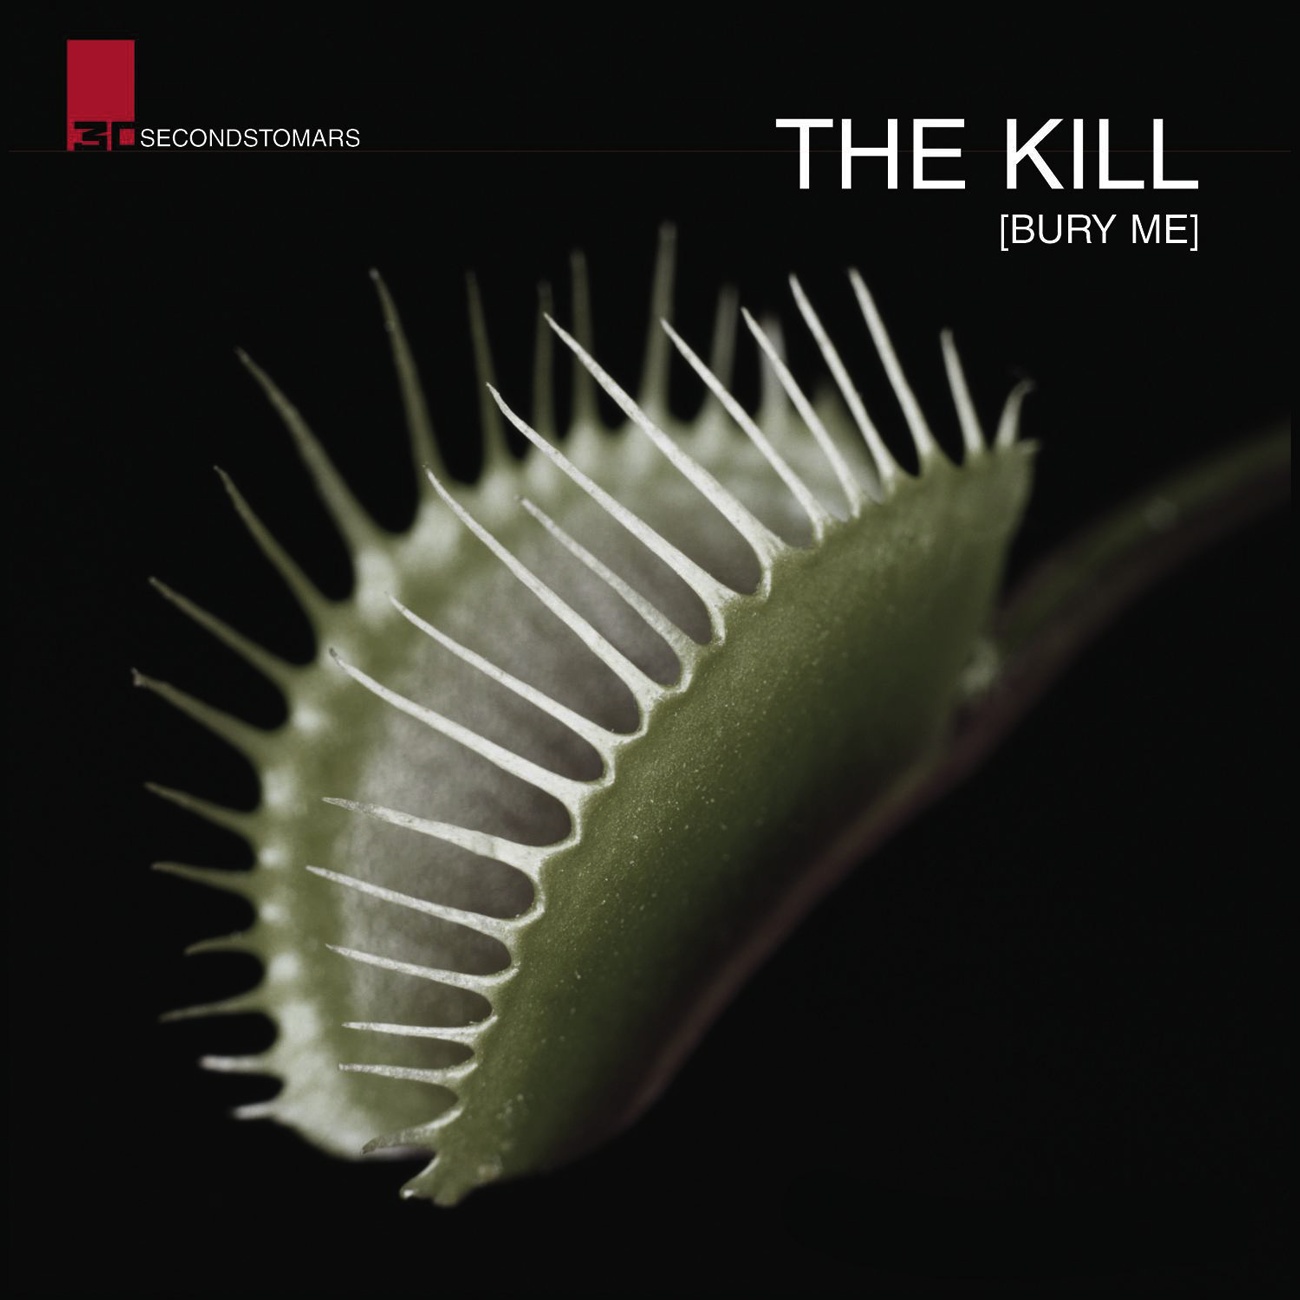 The Kill [Bury Me]